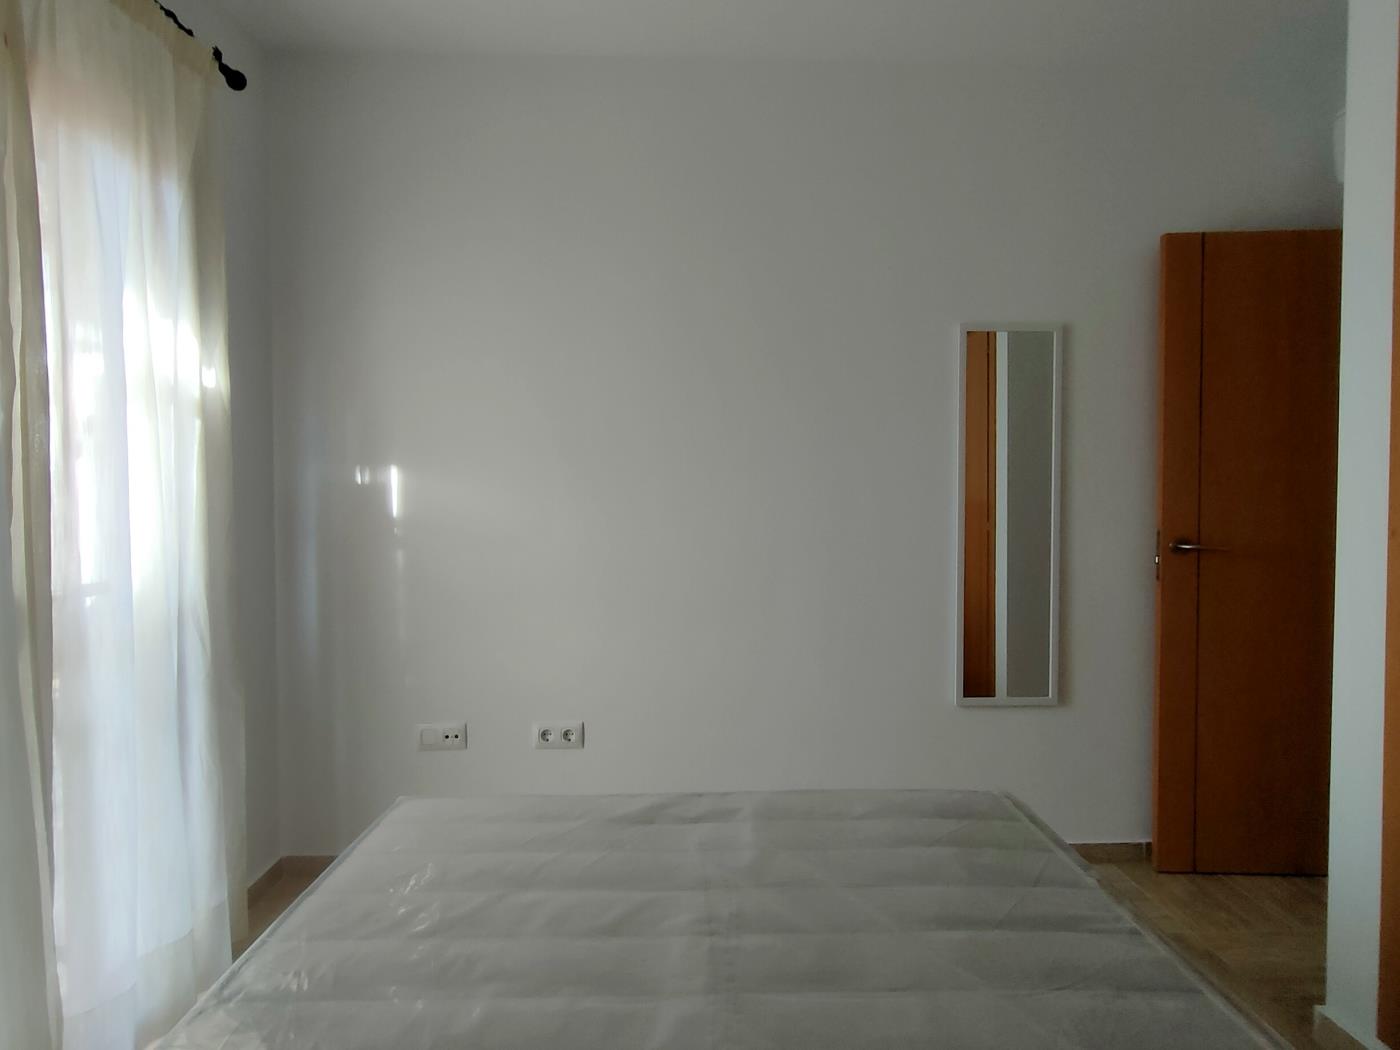 Ref. B6. Two-bedroom apartment on the second floor in Chiclana de la frontera